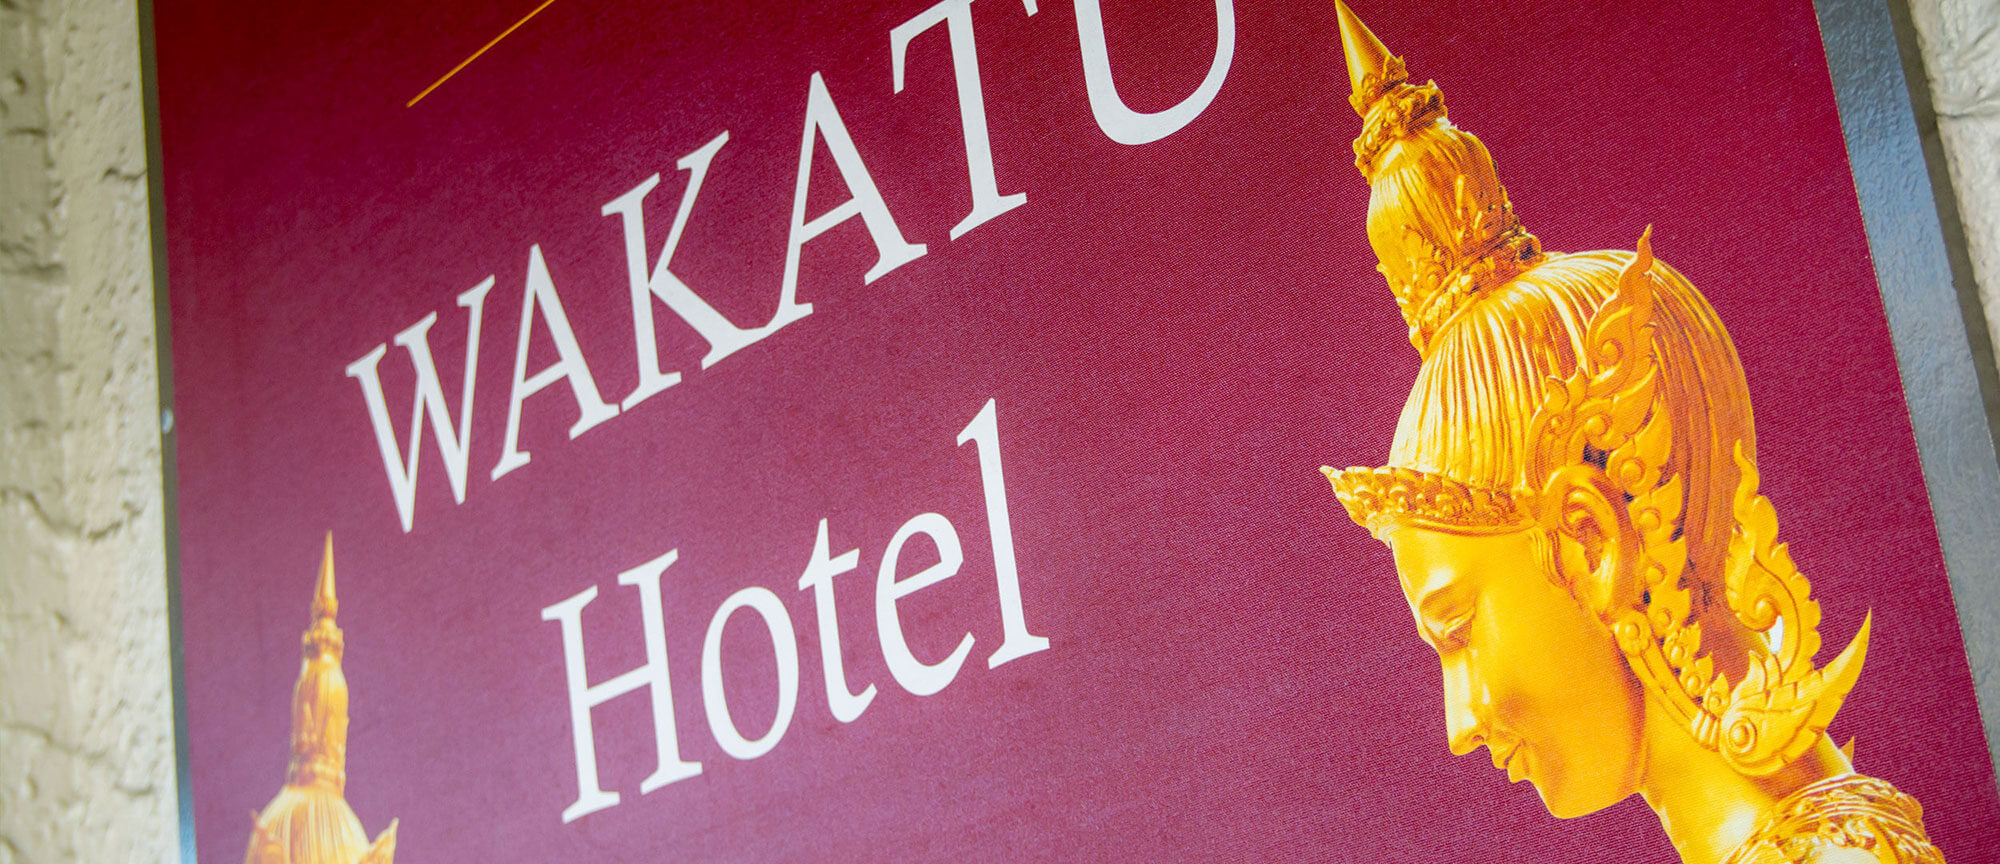 Wakatu Hotel street signage in Nelson